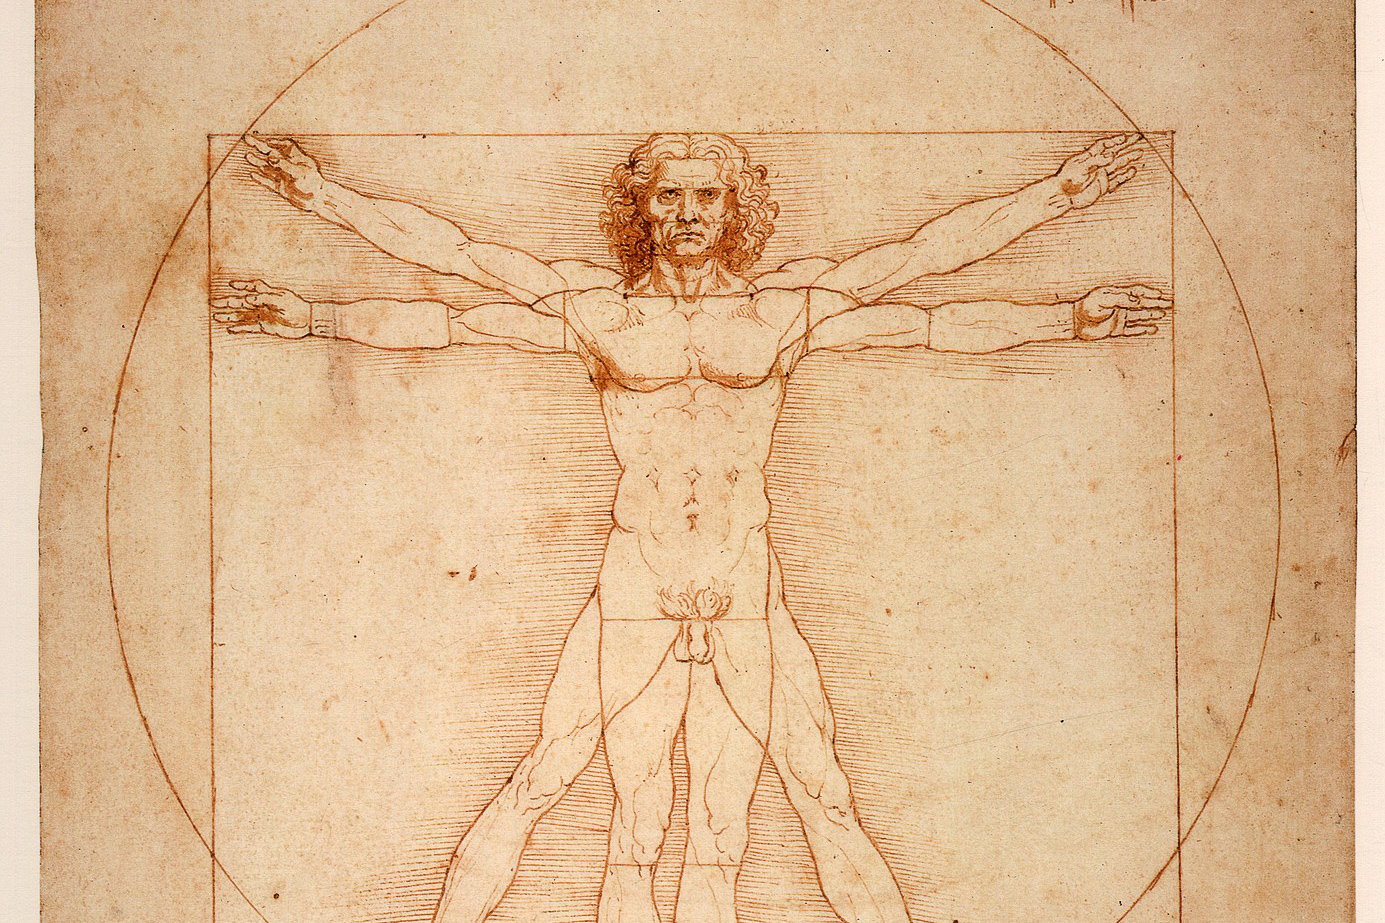 Leonardo da Vinci's drawing of the Vitruvian Man